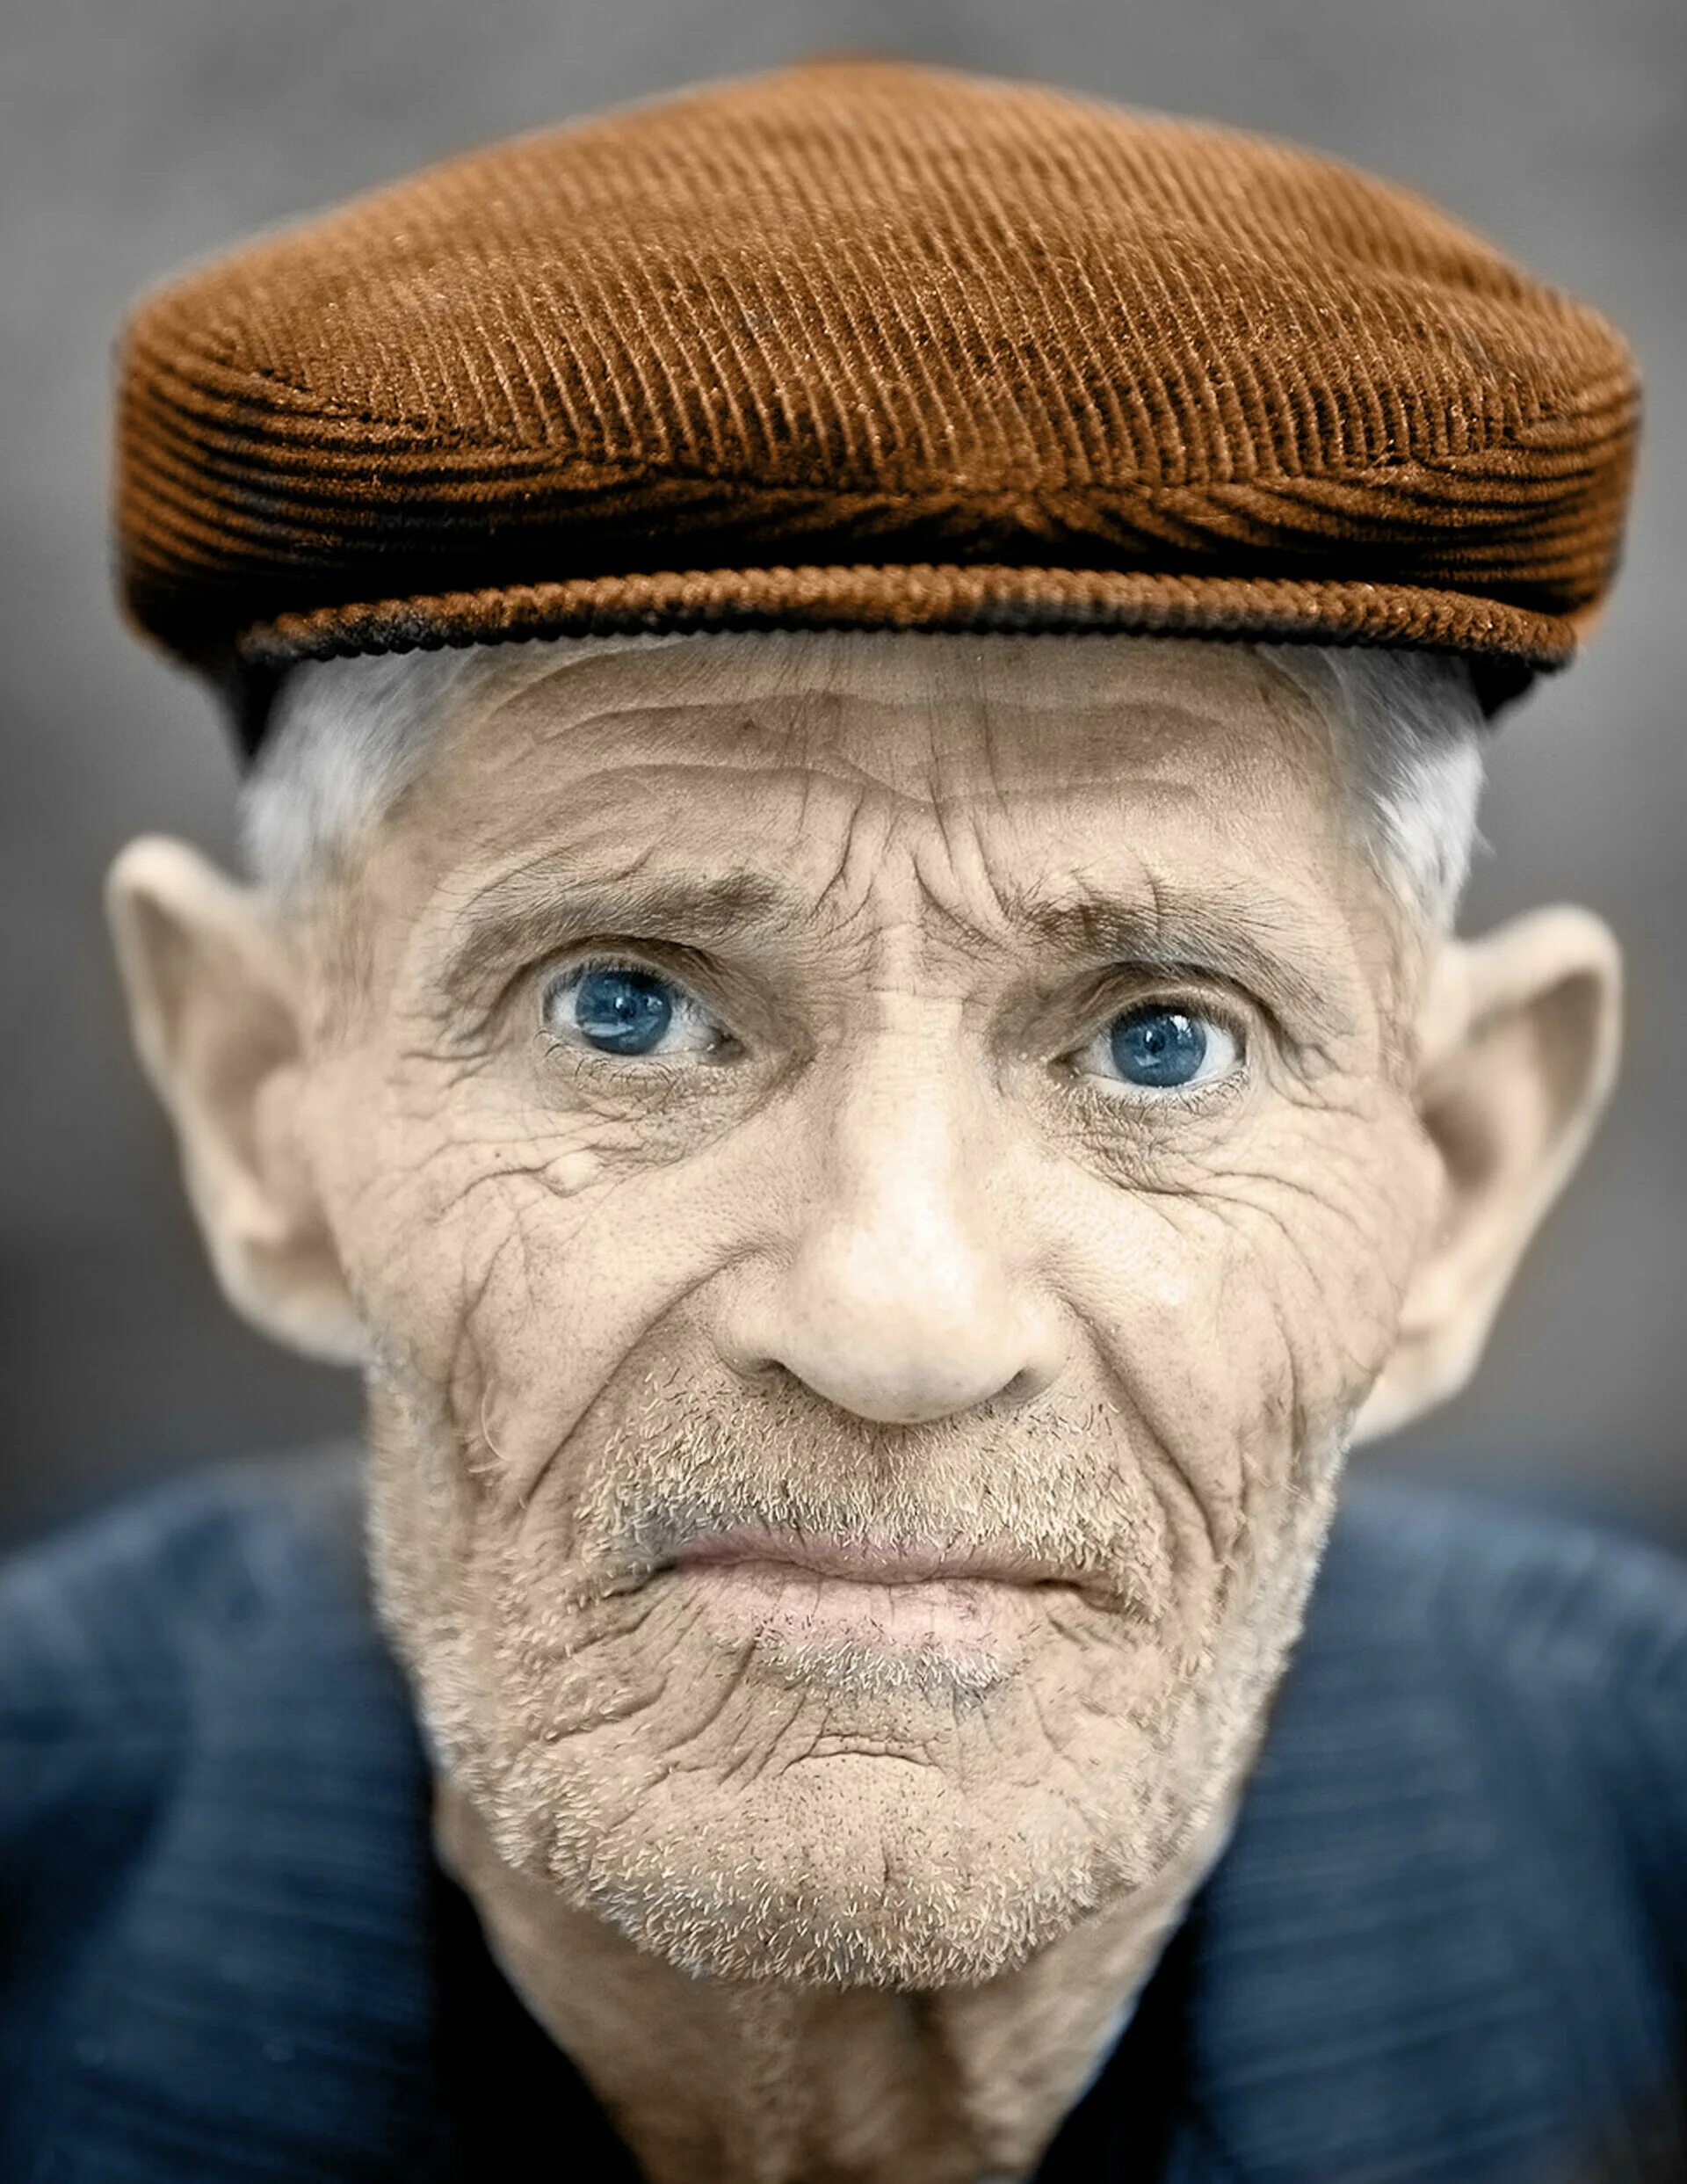 Старый мужчина лицо. Лицо старика. Портрет человека. Пожилой мужчина. Фотопортрет старика.